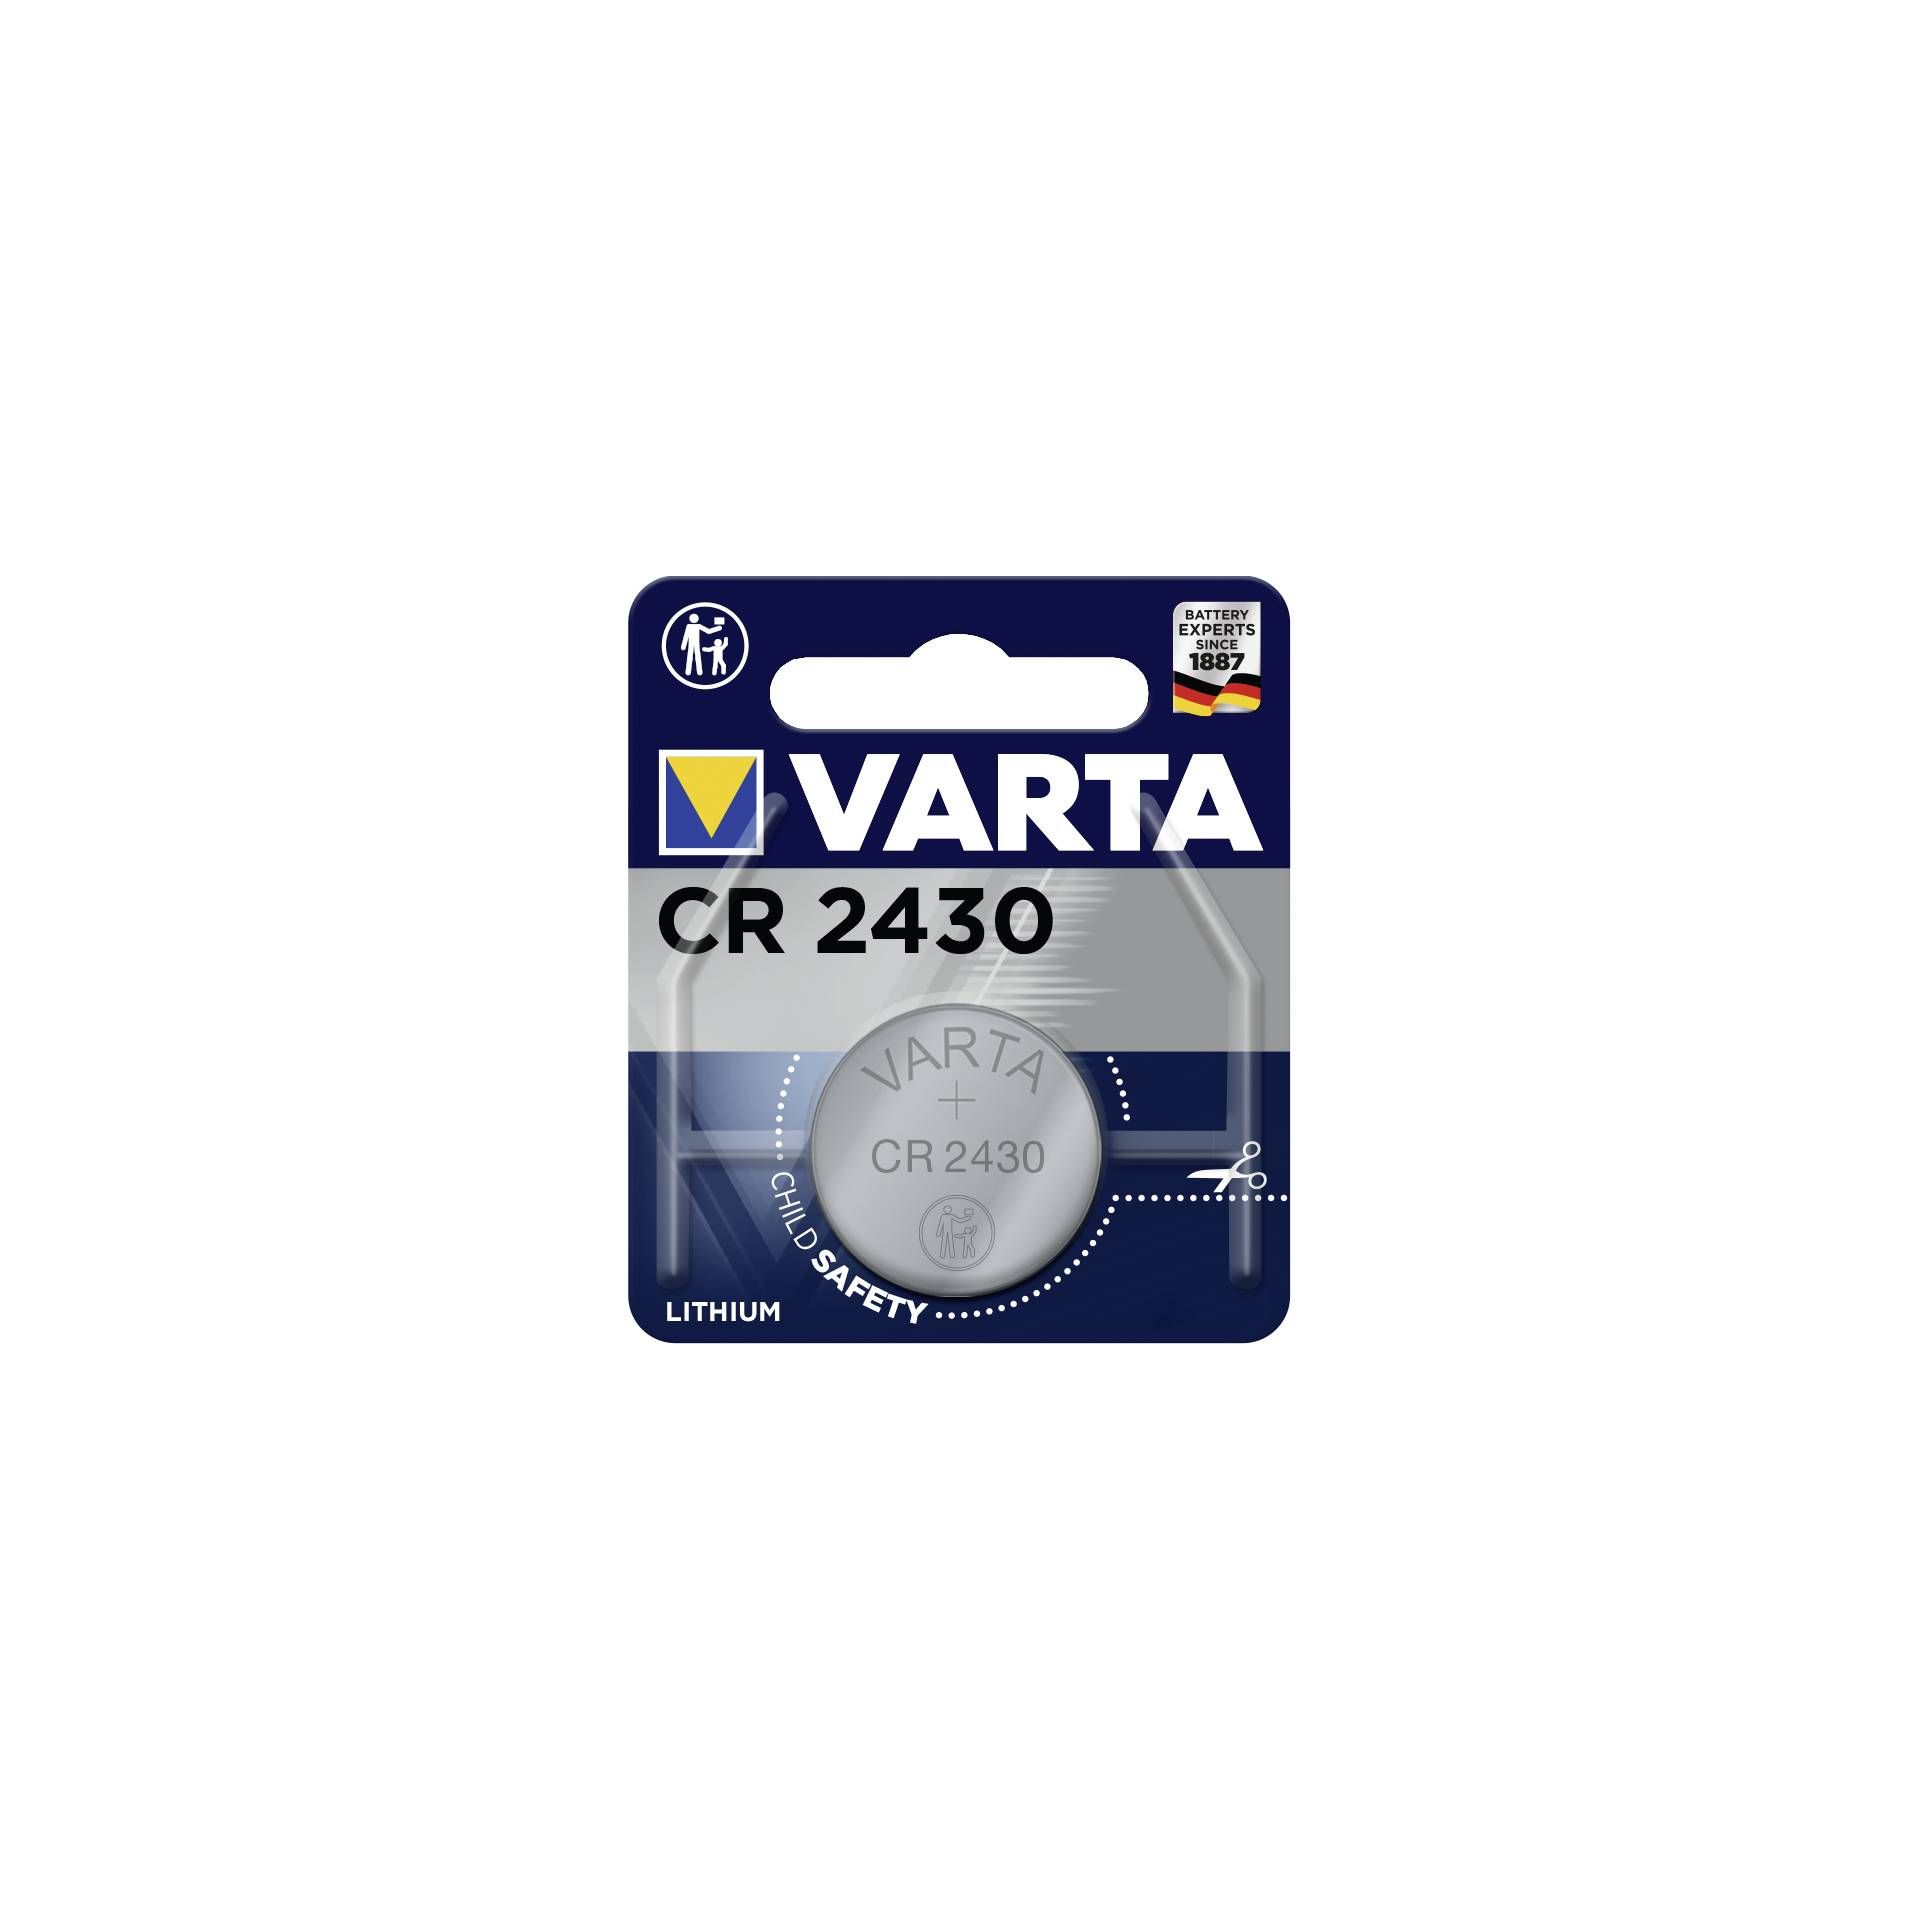 1 Varta electronic CR 2430